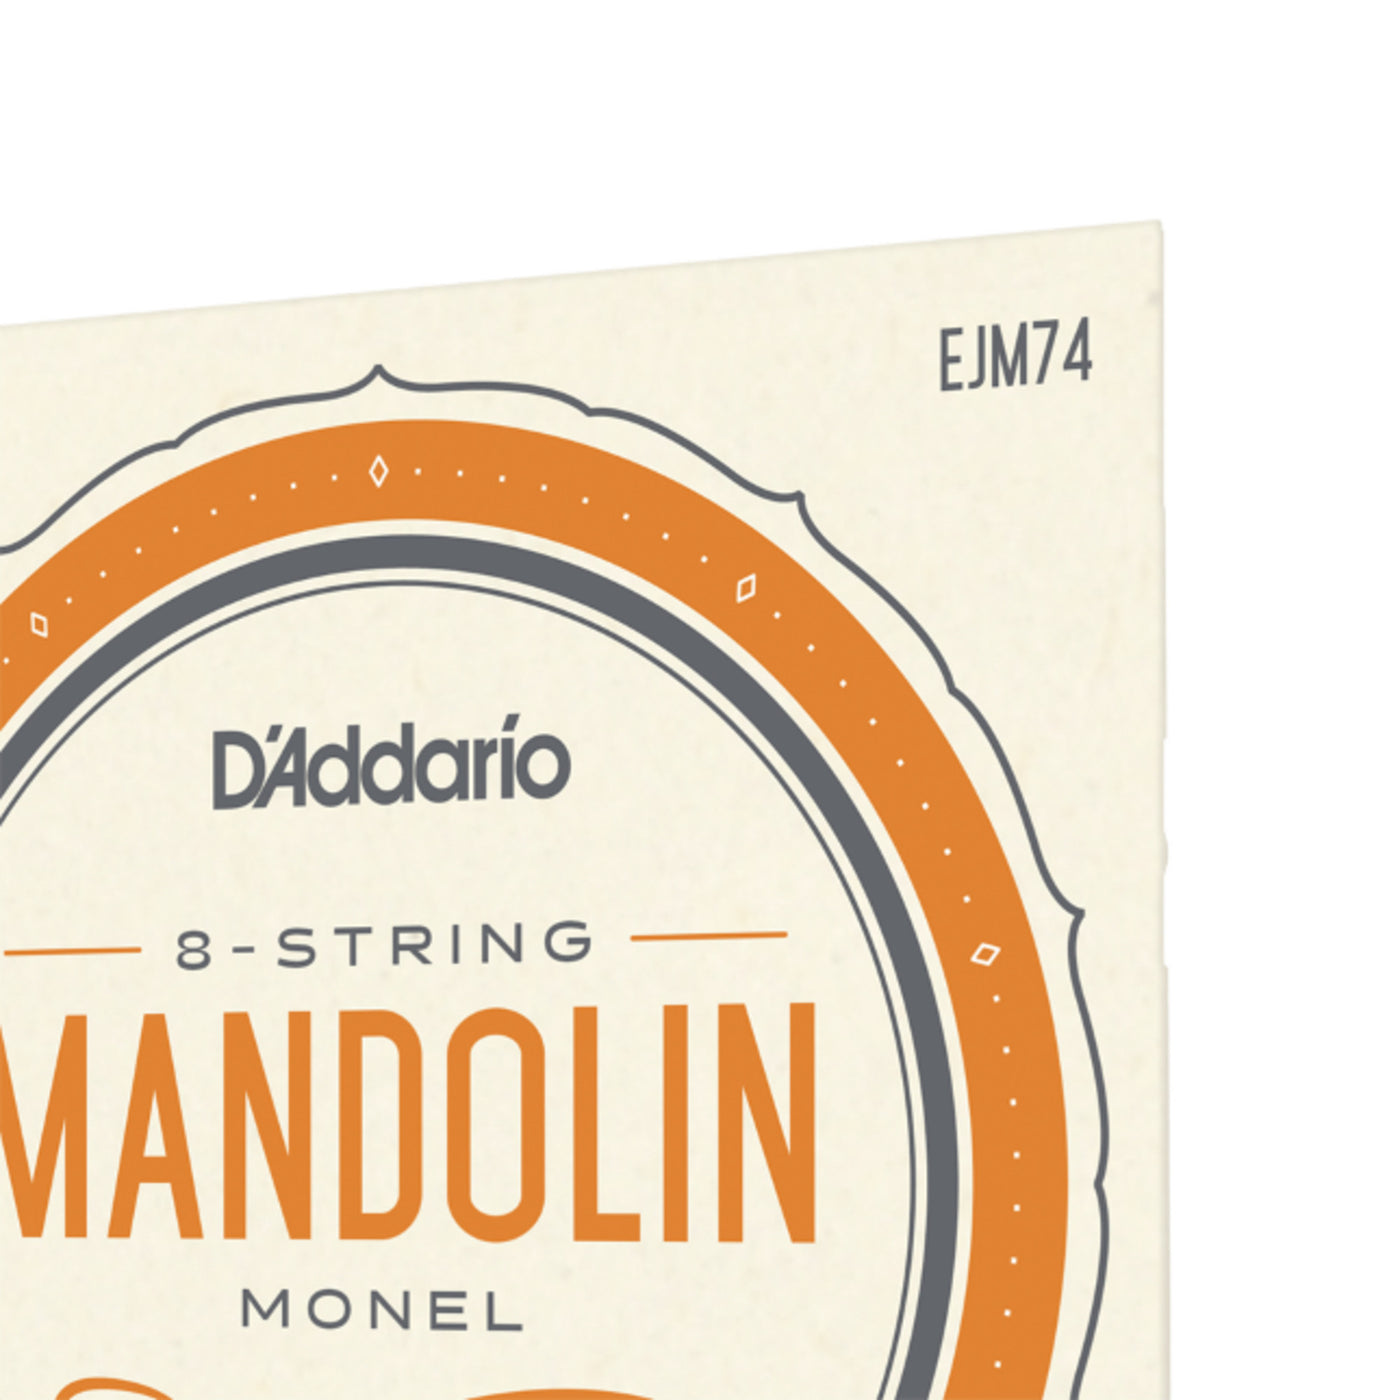 D'Addario Monel Mandolin Strings, Medium, 11-40 (EJM74)